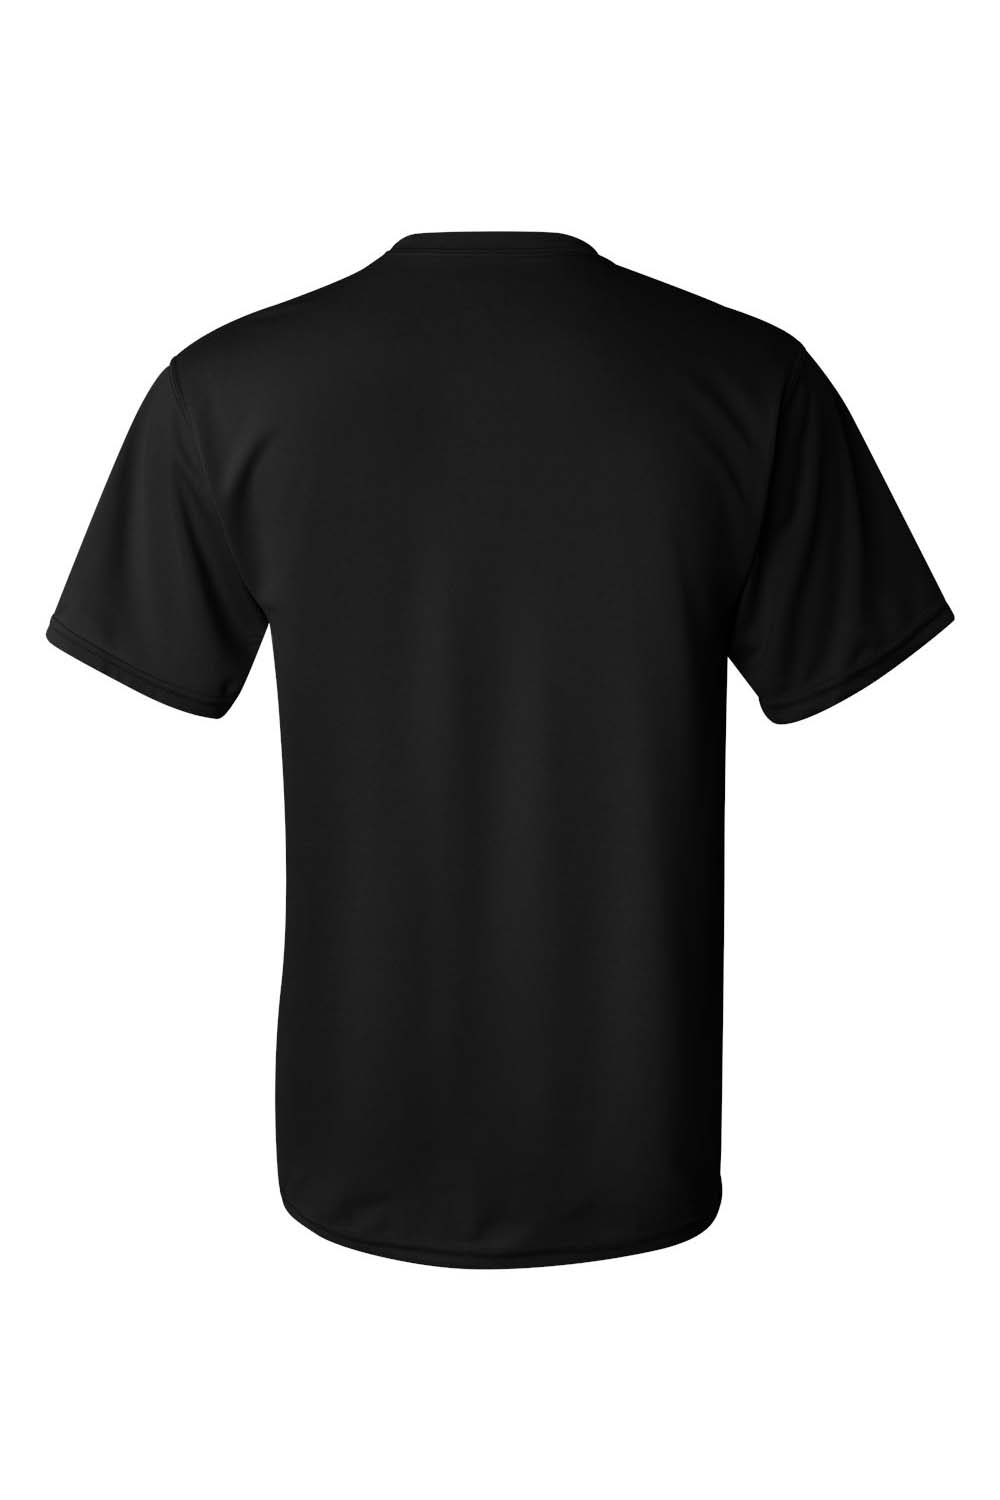 Augusta Sportswear 790 Mens Moisture Wicking Short Sleeve Crewneck T-Shirt Black Model Flat Back